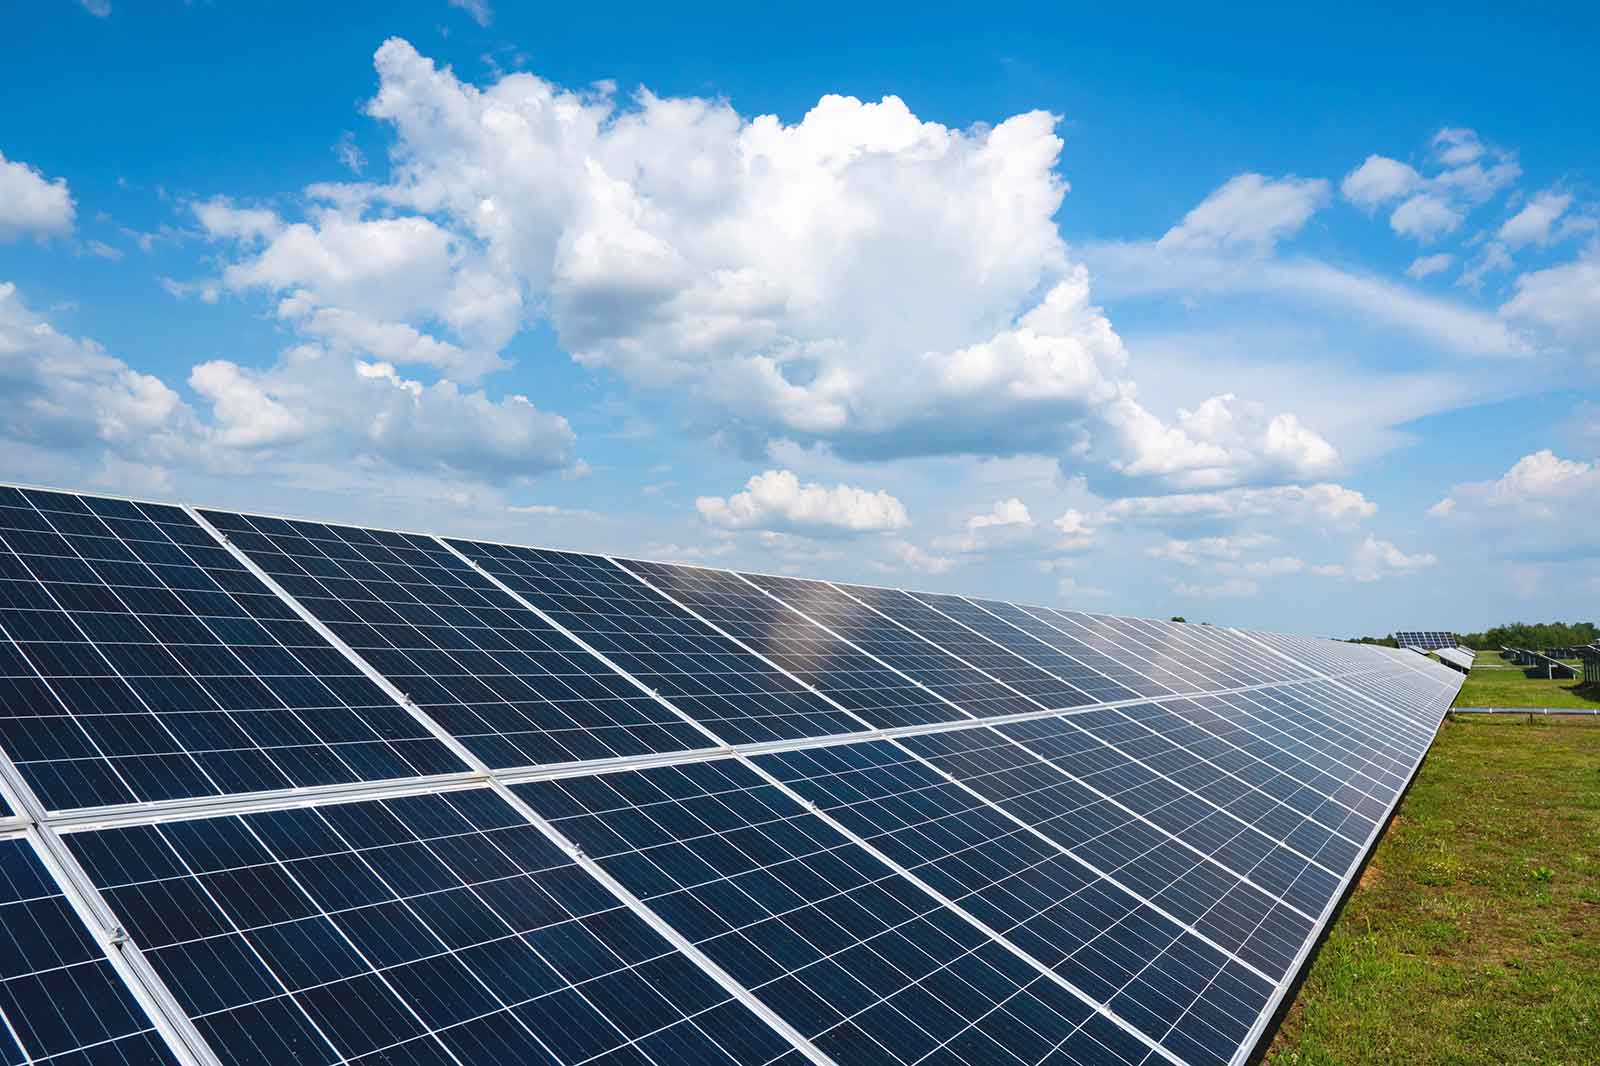 WR Graceland Solar | RWE in the Americas